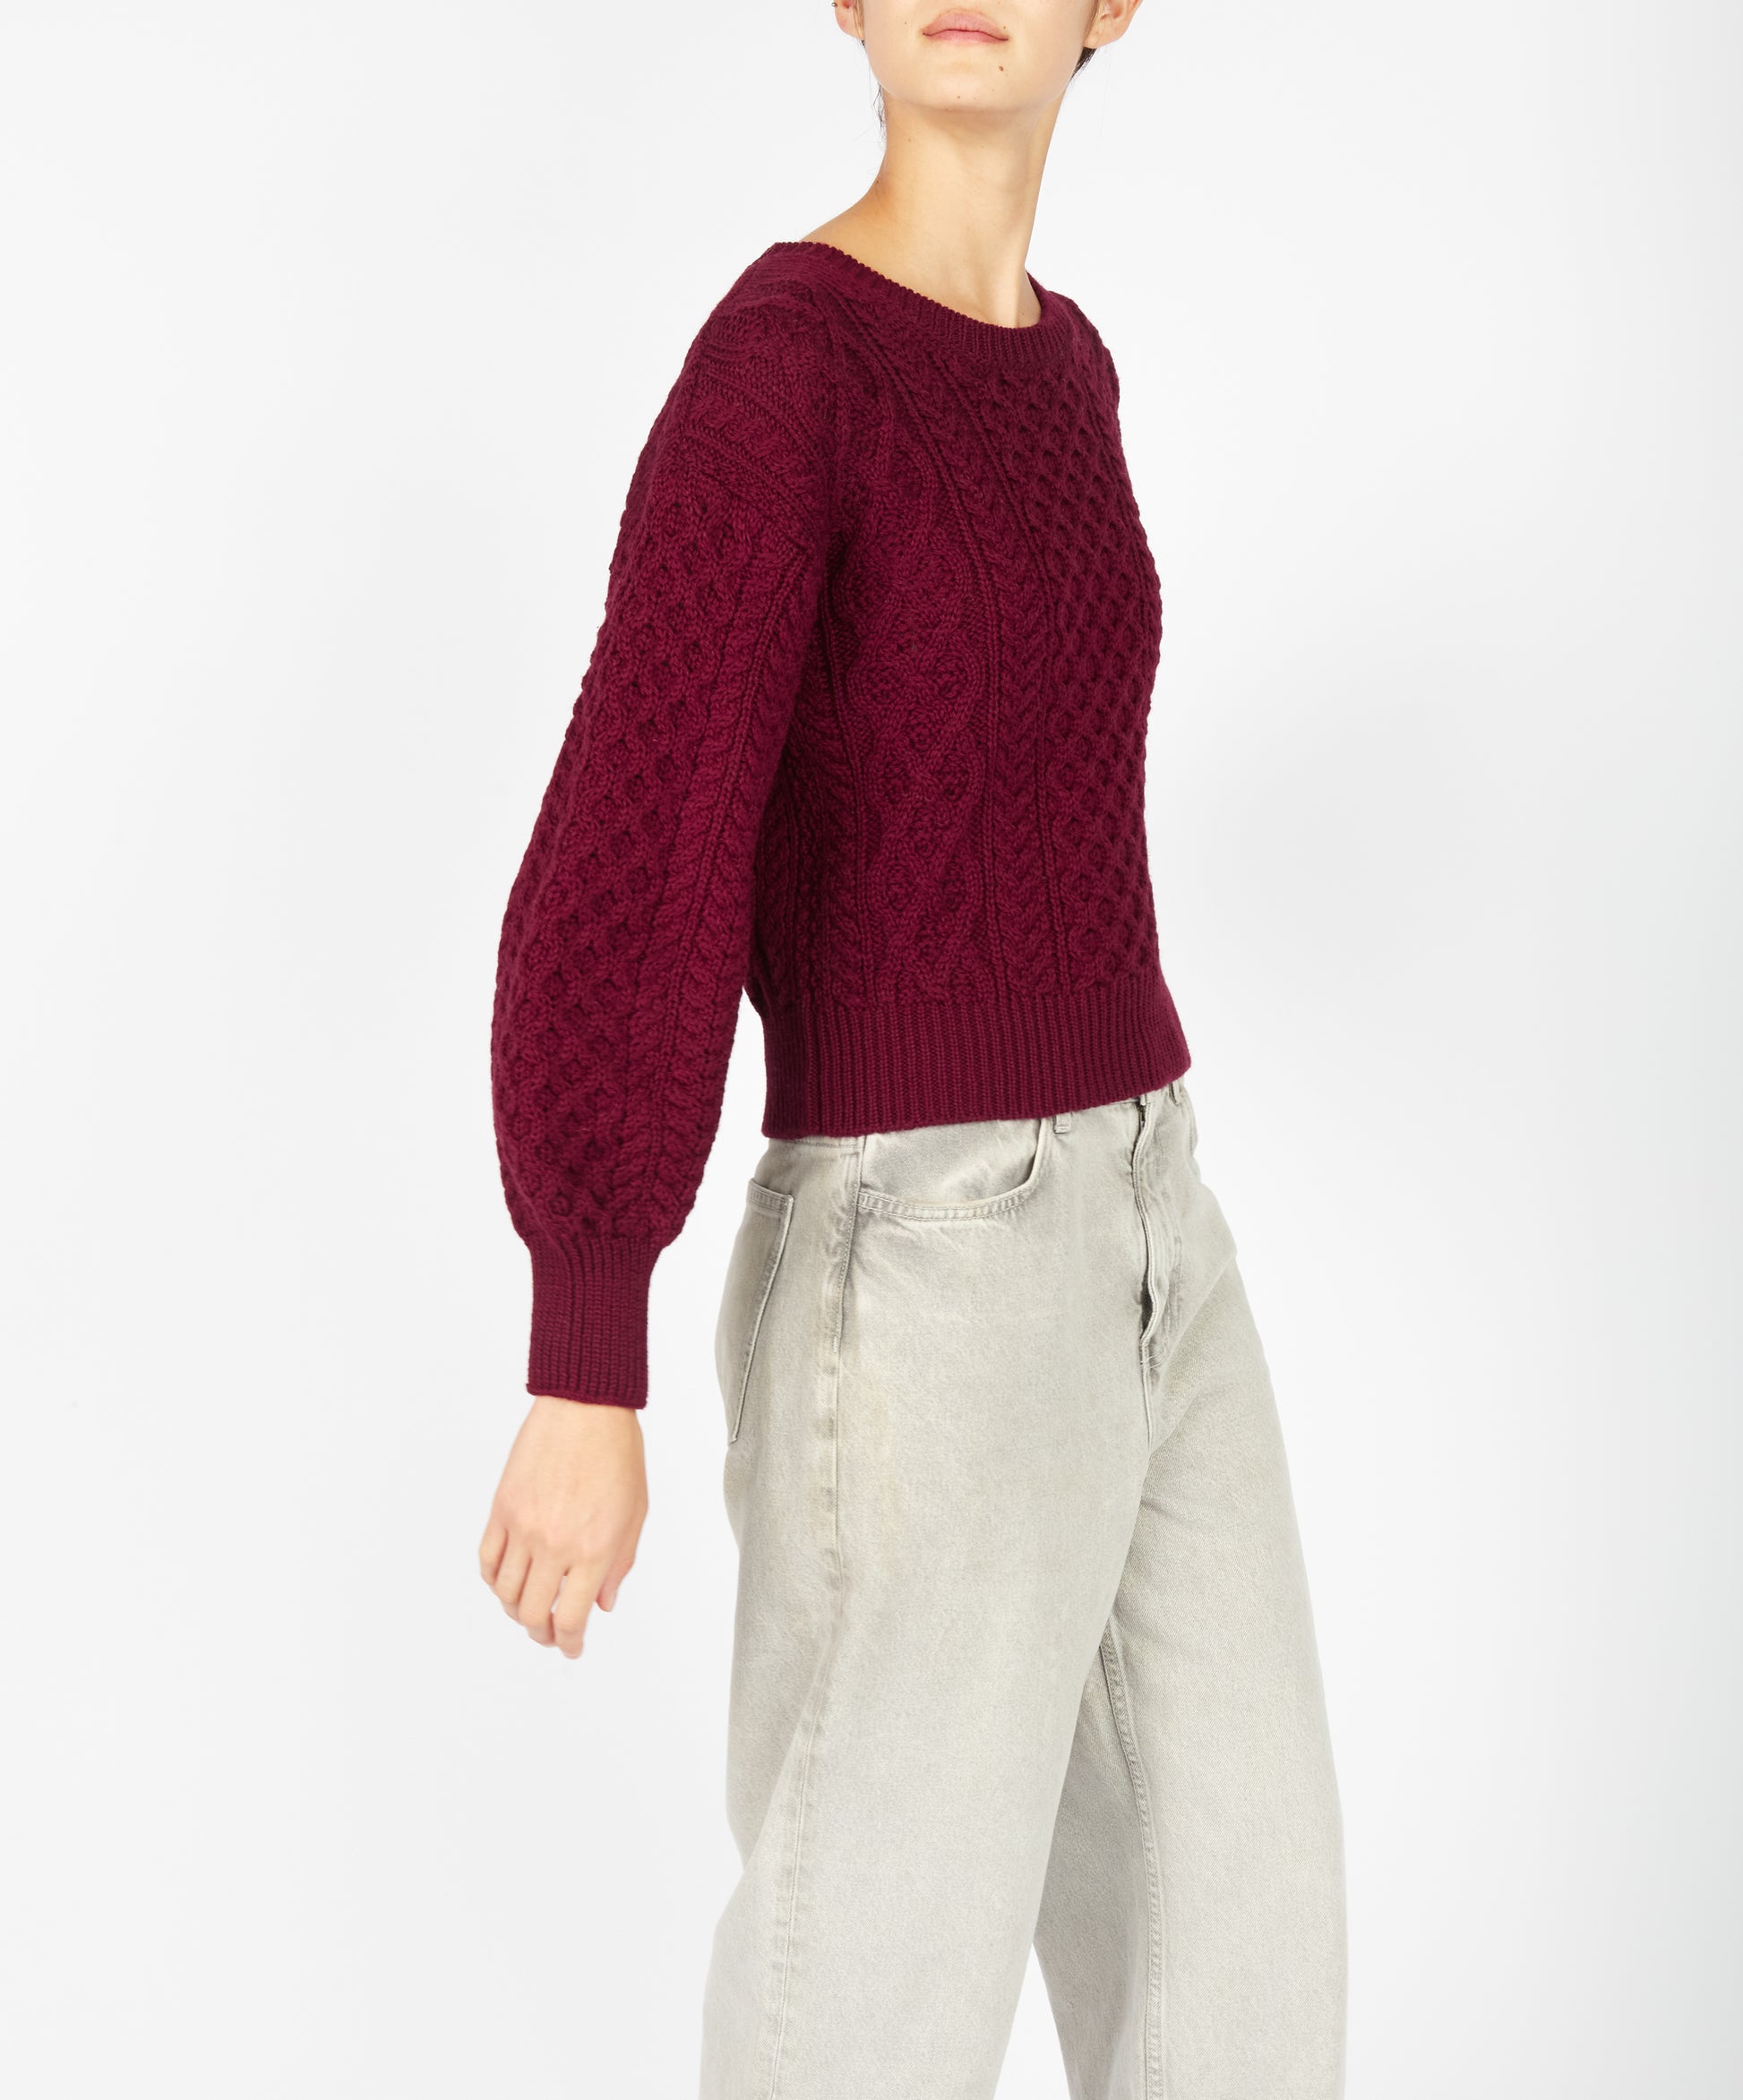 IrelandsEye Knitwear Honeysuckle Cropped Aran Sweater Claret